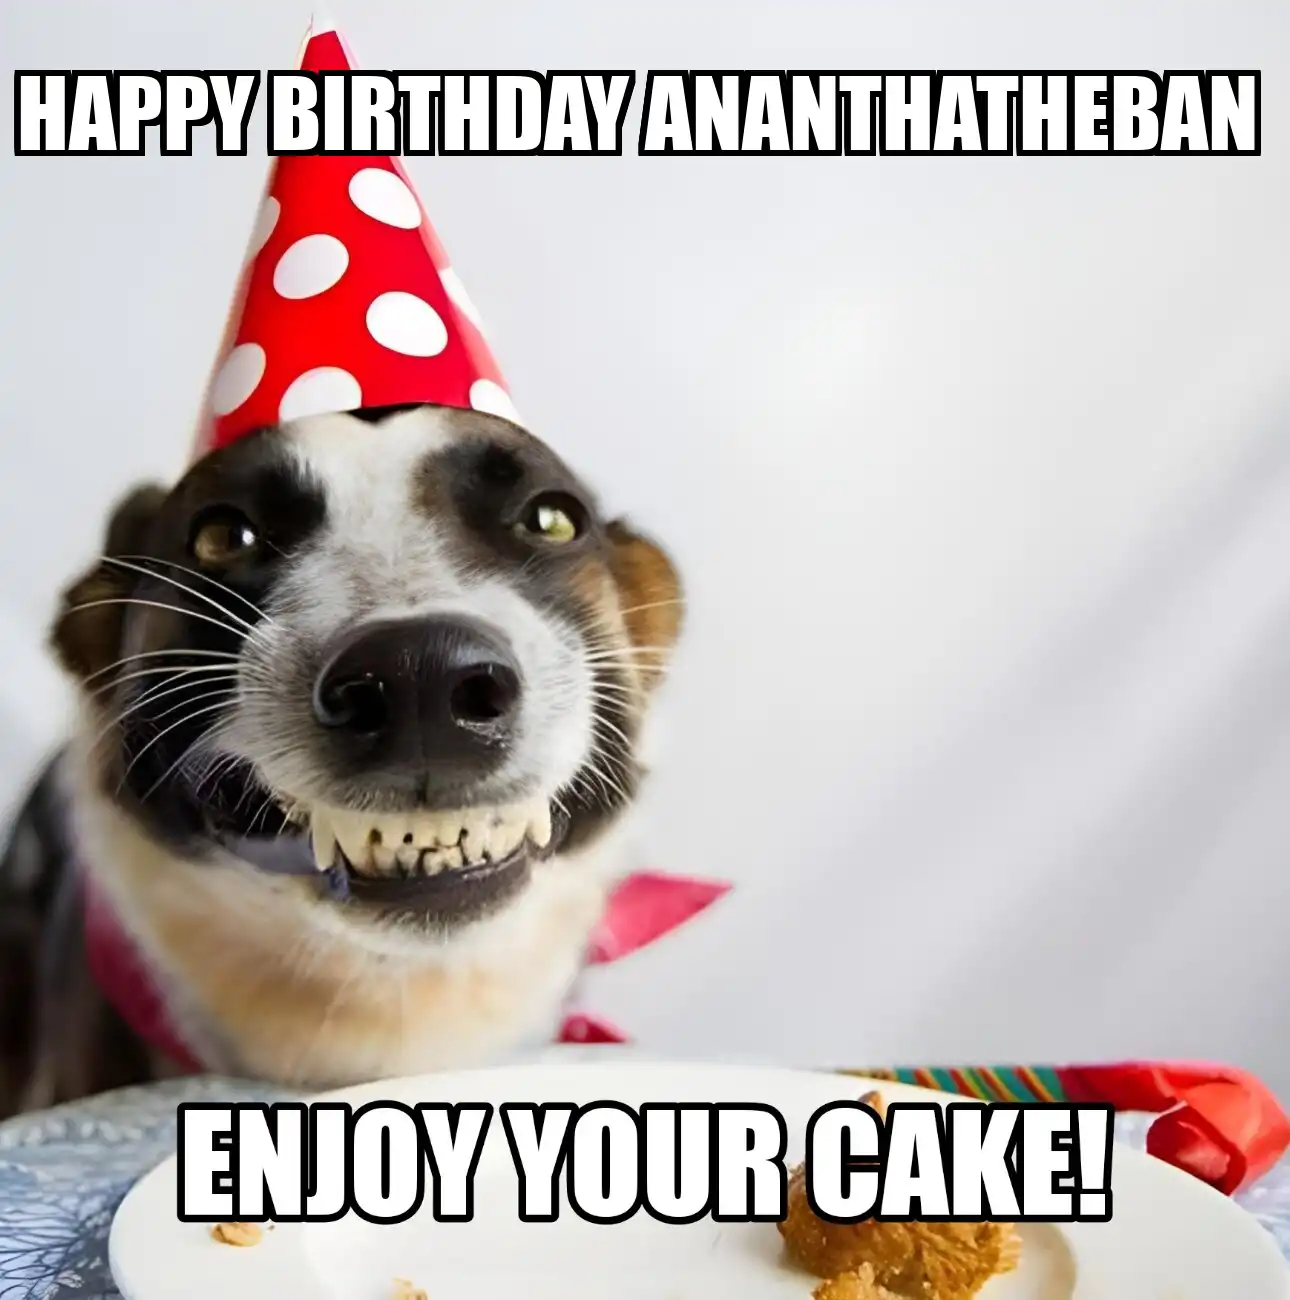 Happy Birthday Ananthatheban Enjoy Your Cake Dog Meme